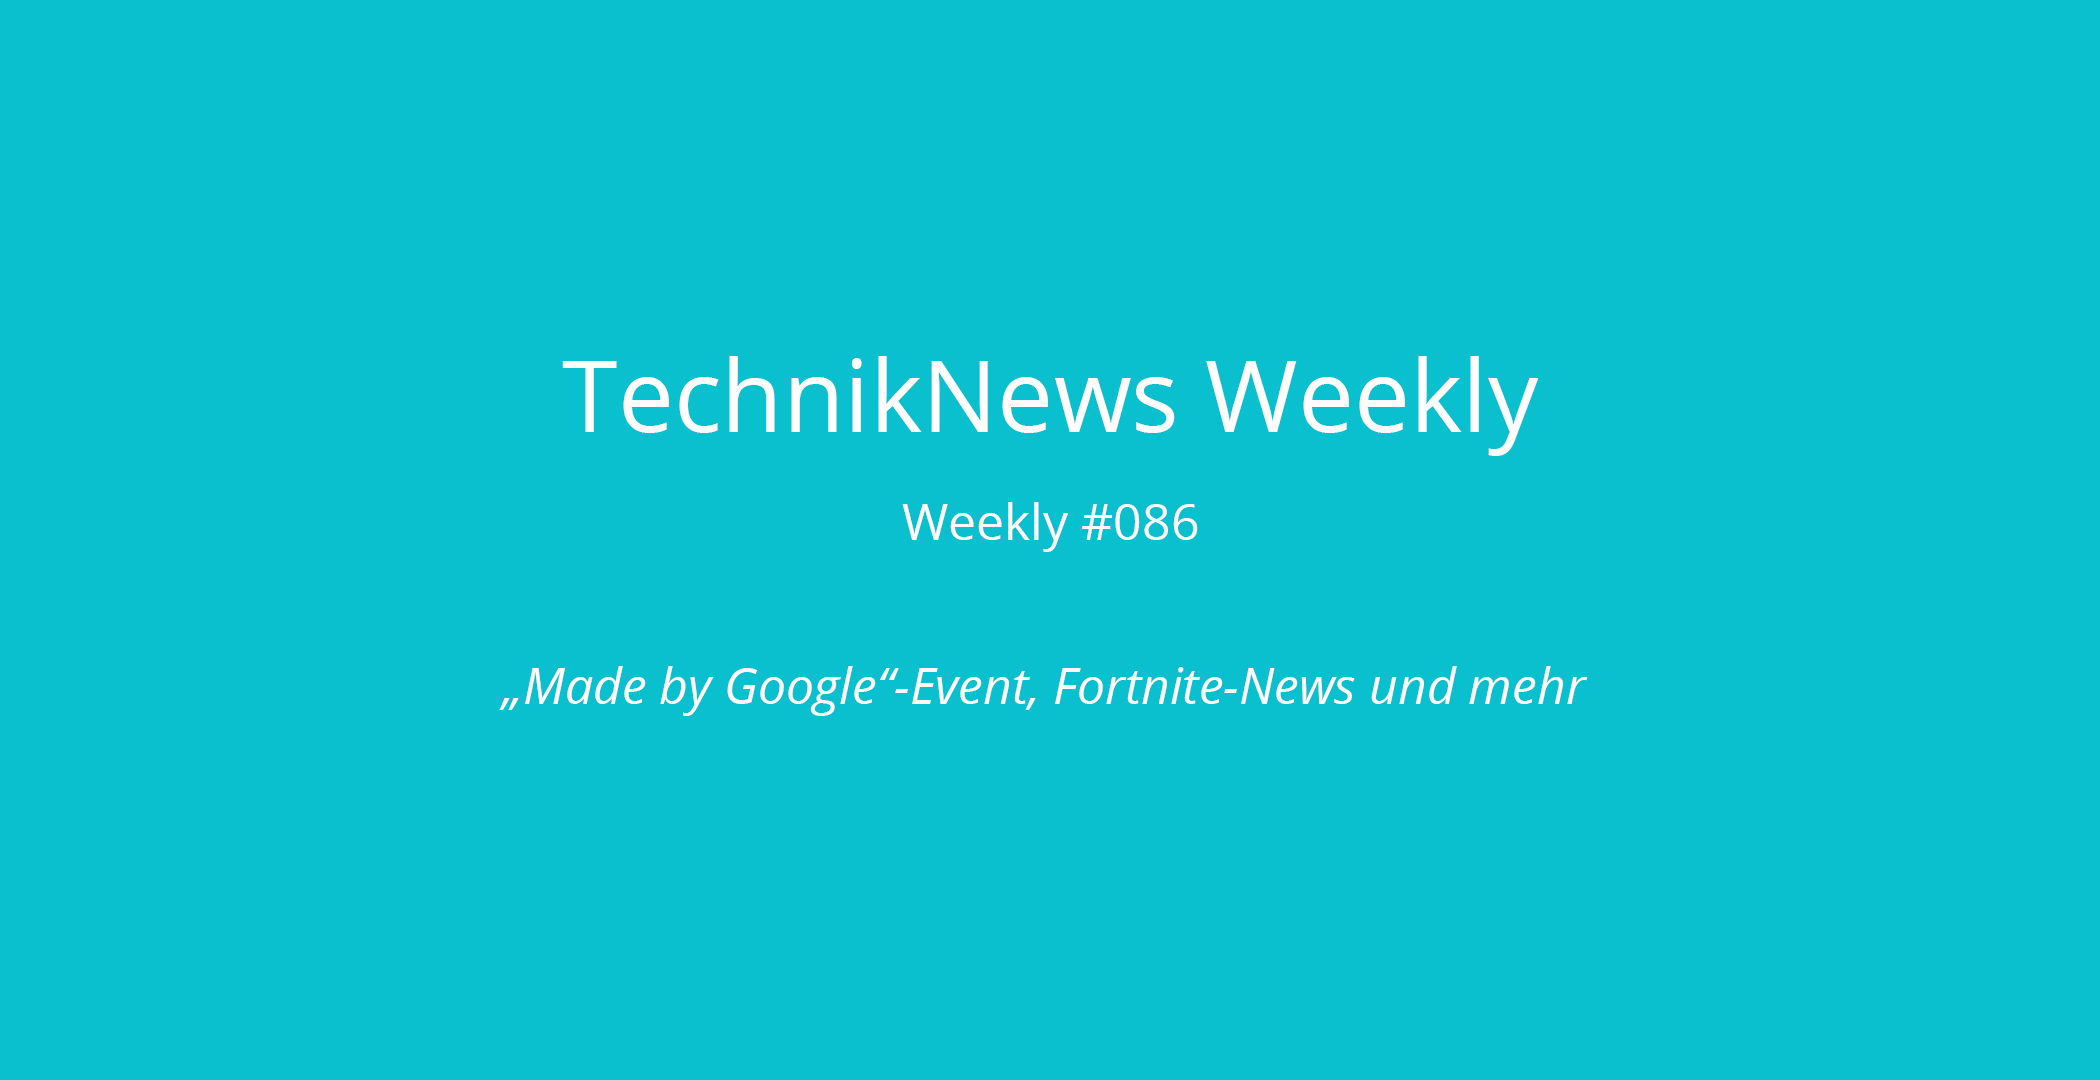 TechnikNews Weekly 086